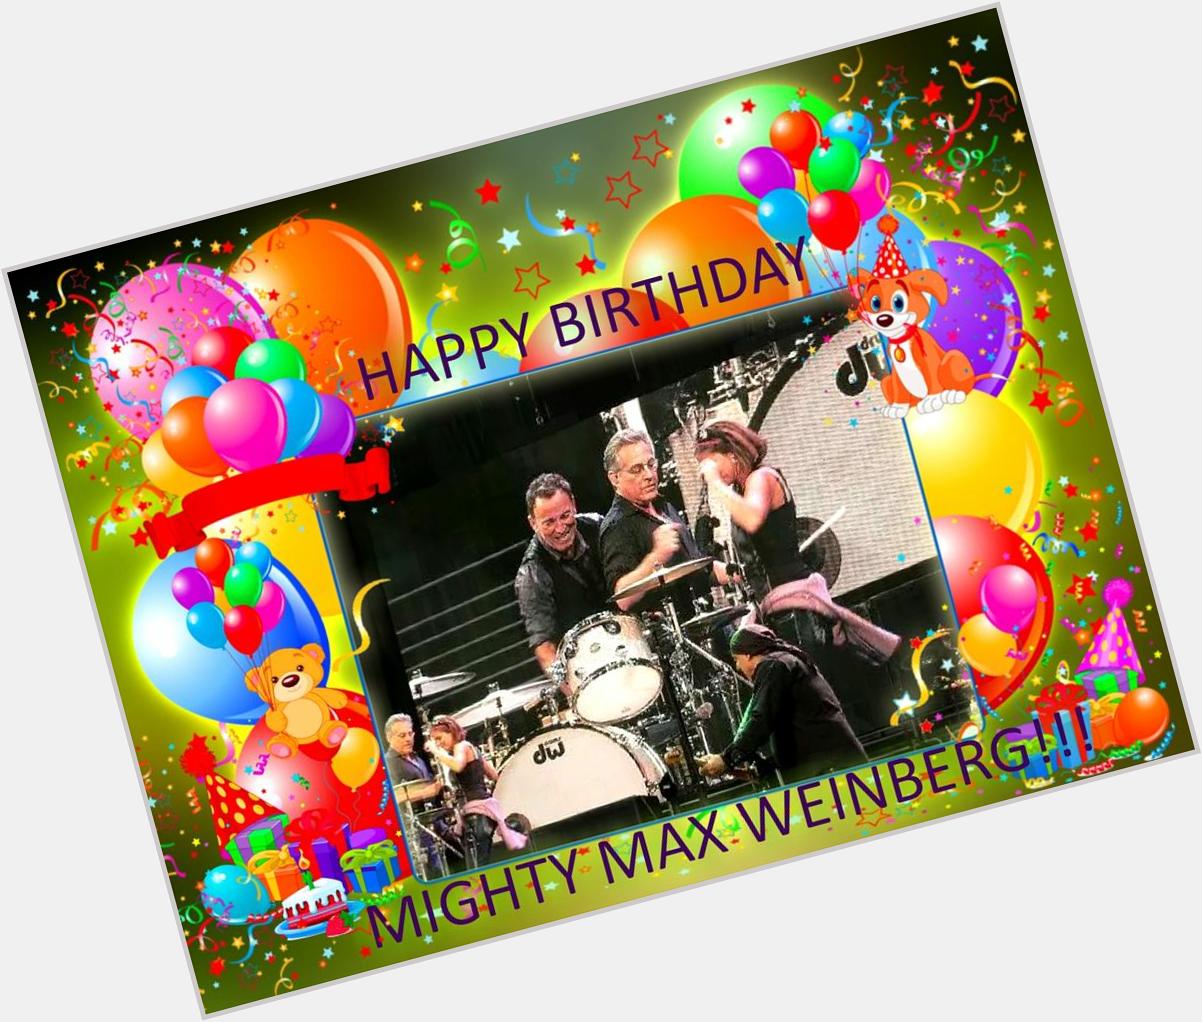 HAPPY BIRTHDAY MIGHTY MAX WEINBERG!!!! Hope u have a great 1ne :) 